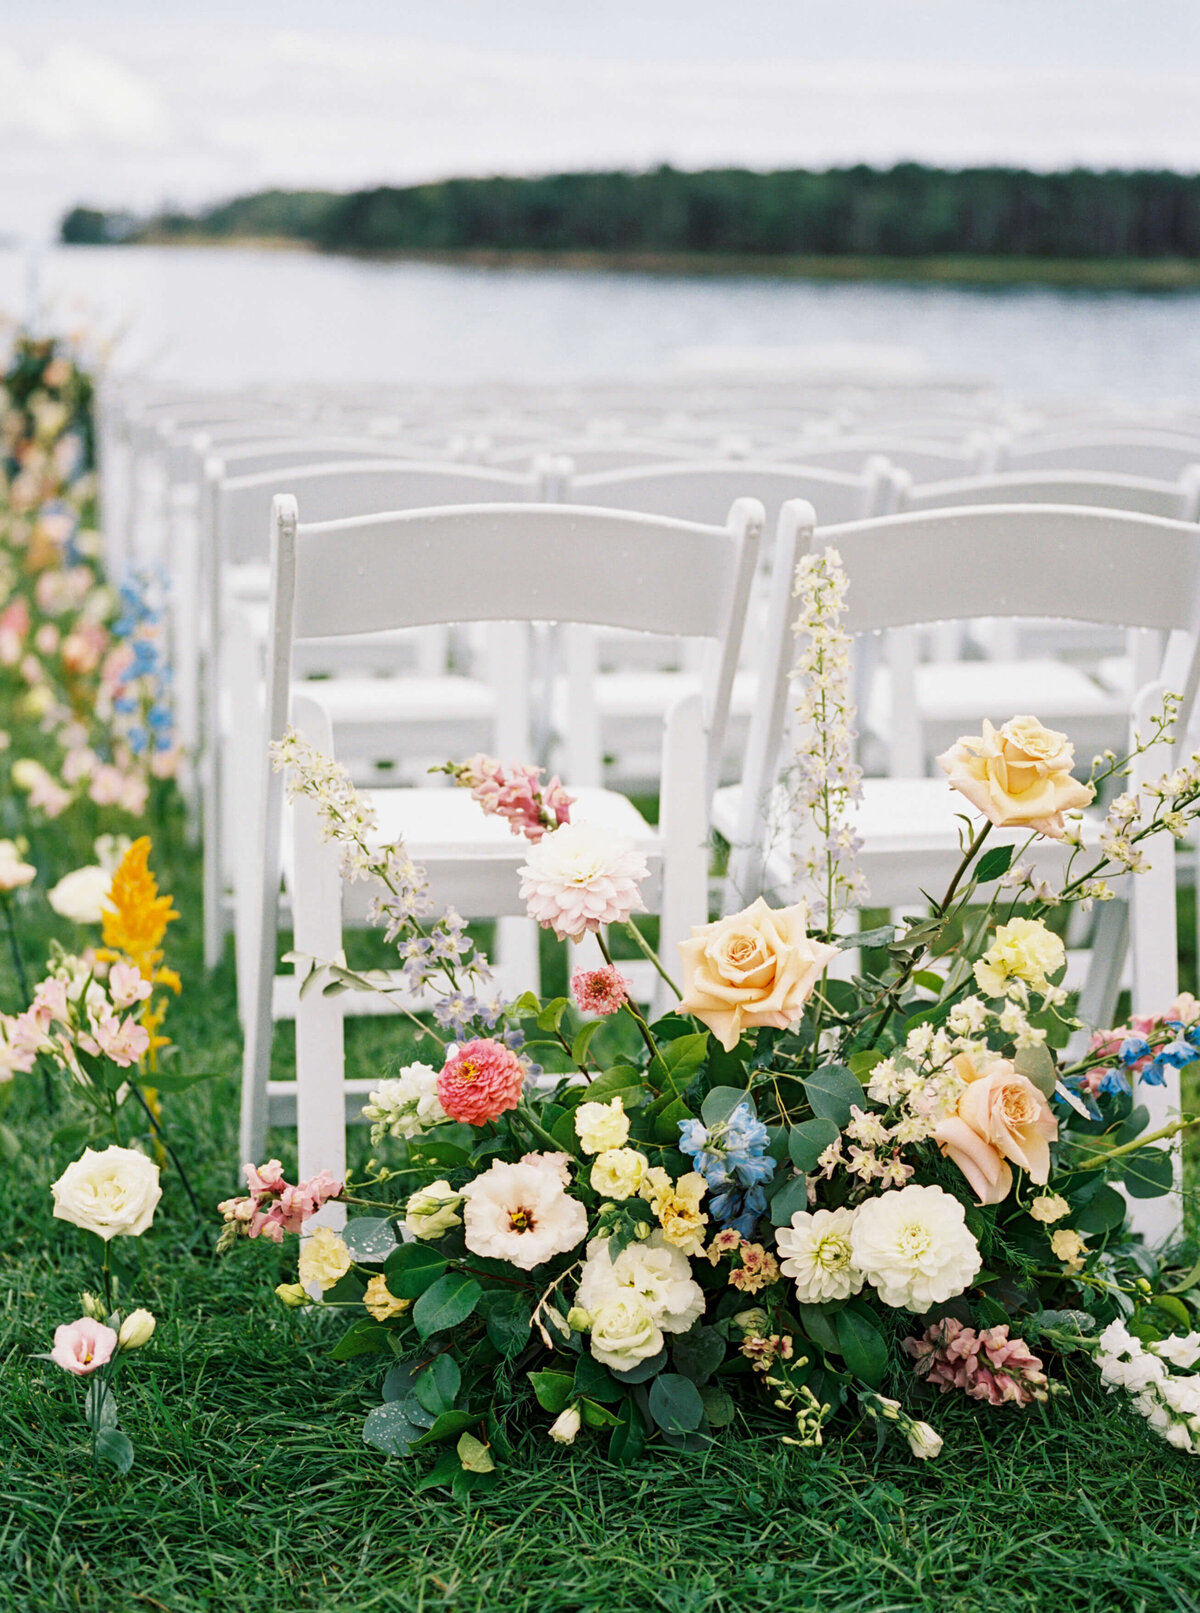 Wedding ceremony chairs and florals at Oak Island Resort Wedding, Nova Scotia